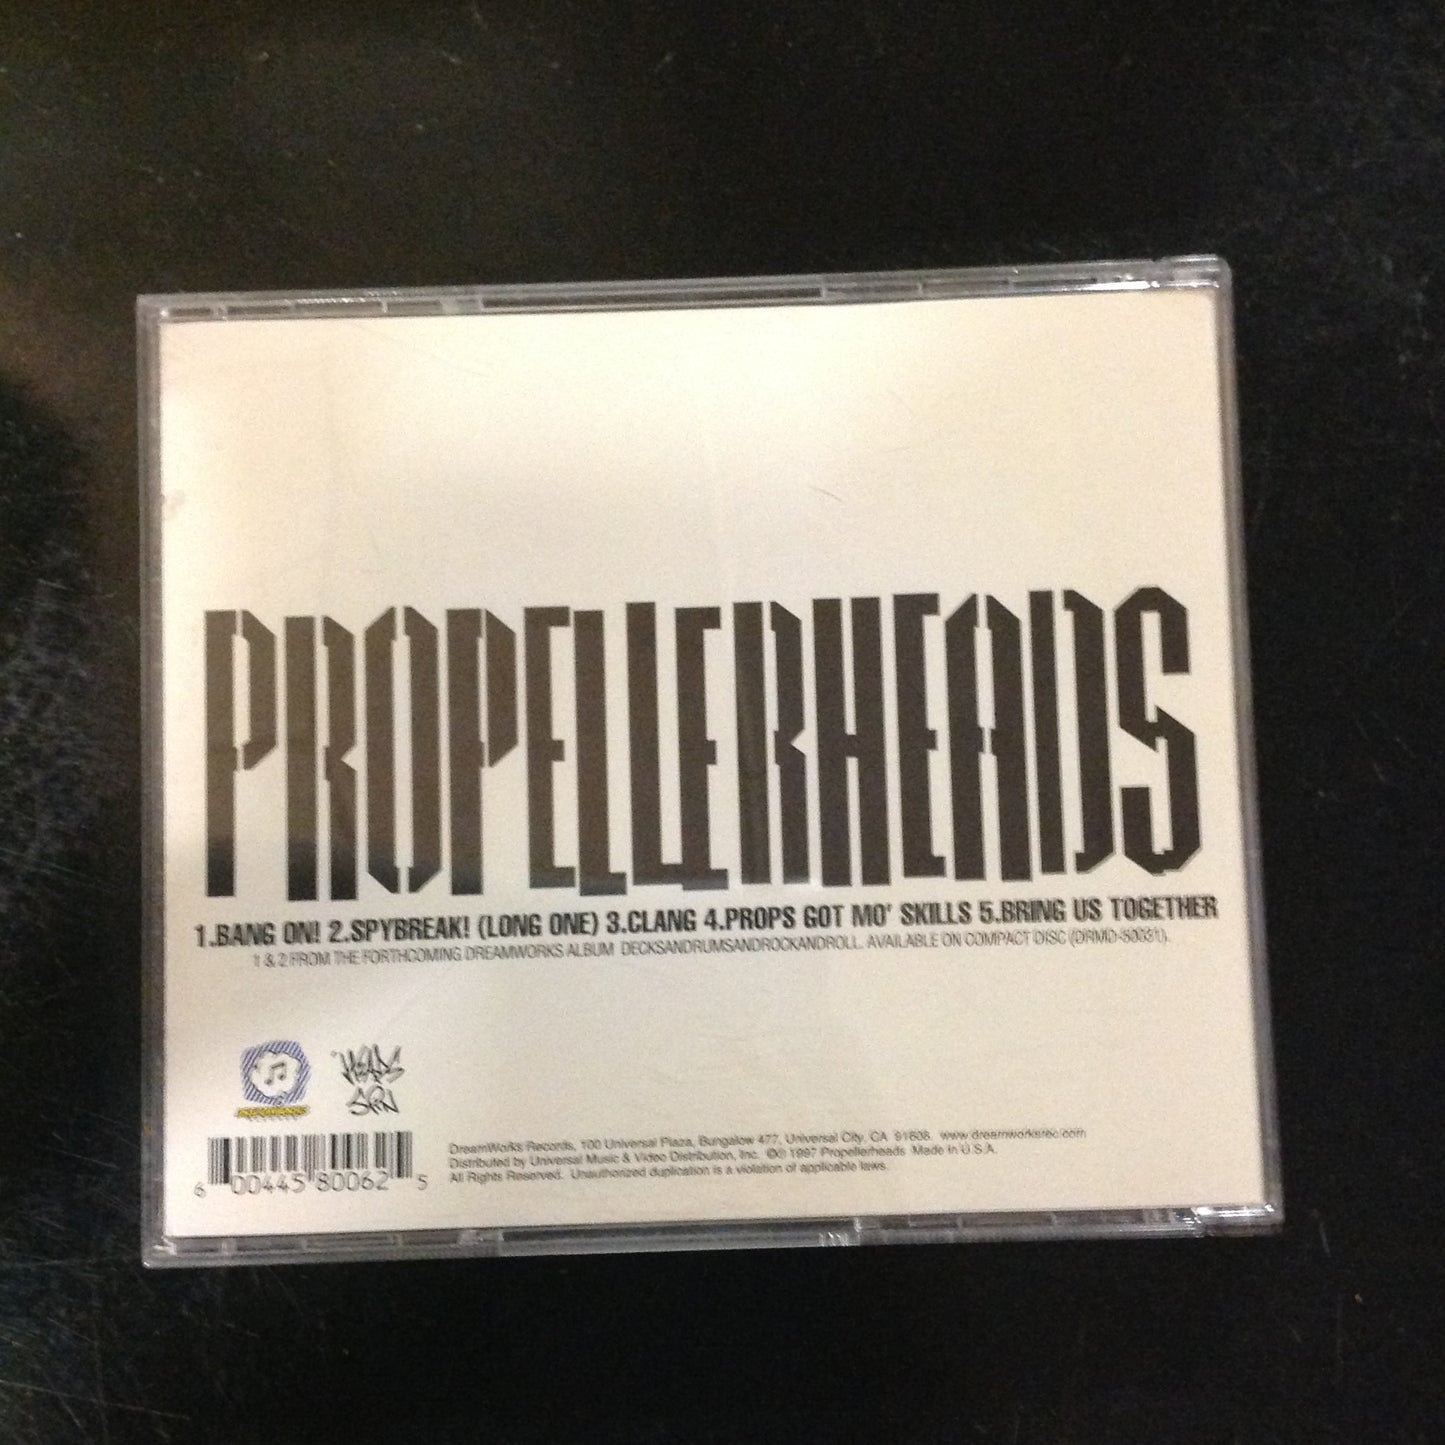 CD Propellerheads Maxi CD DRMDM-58006